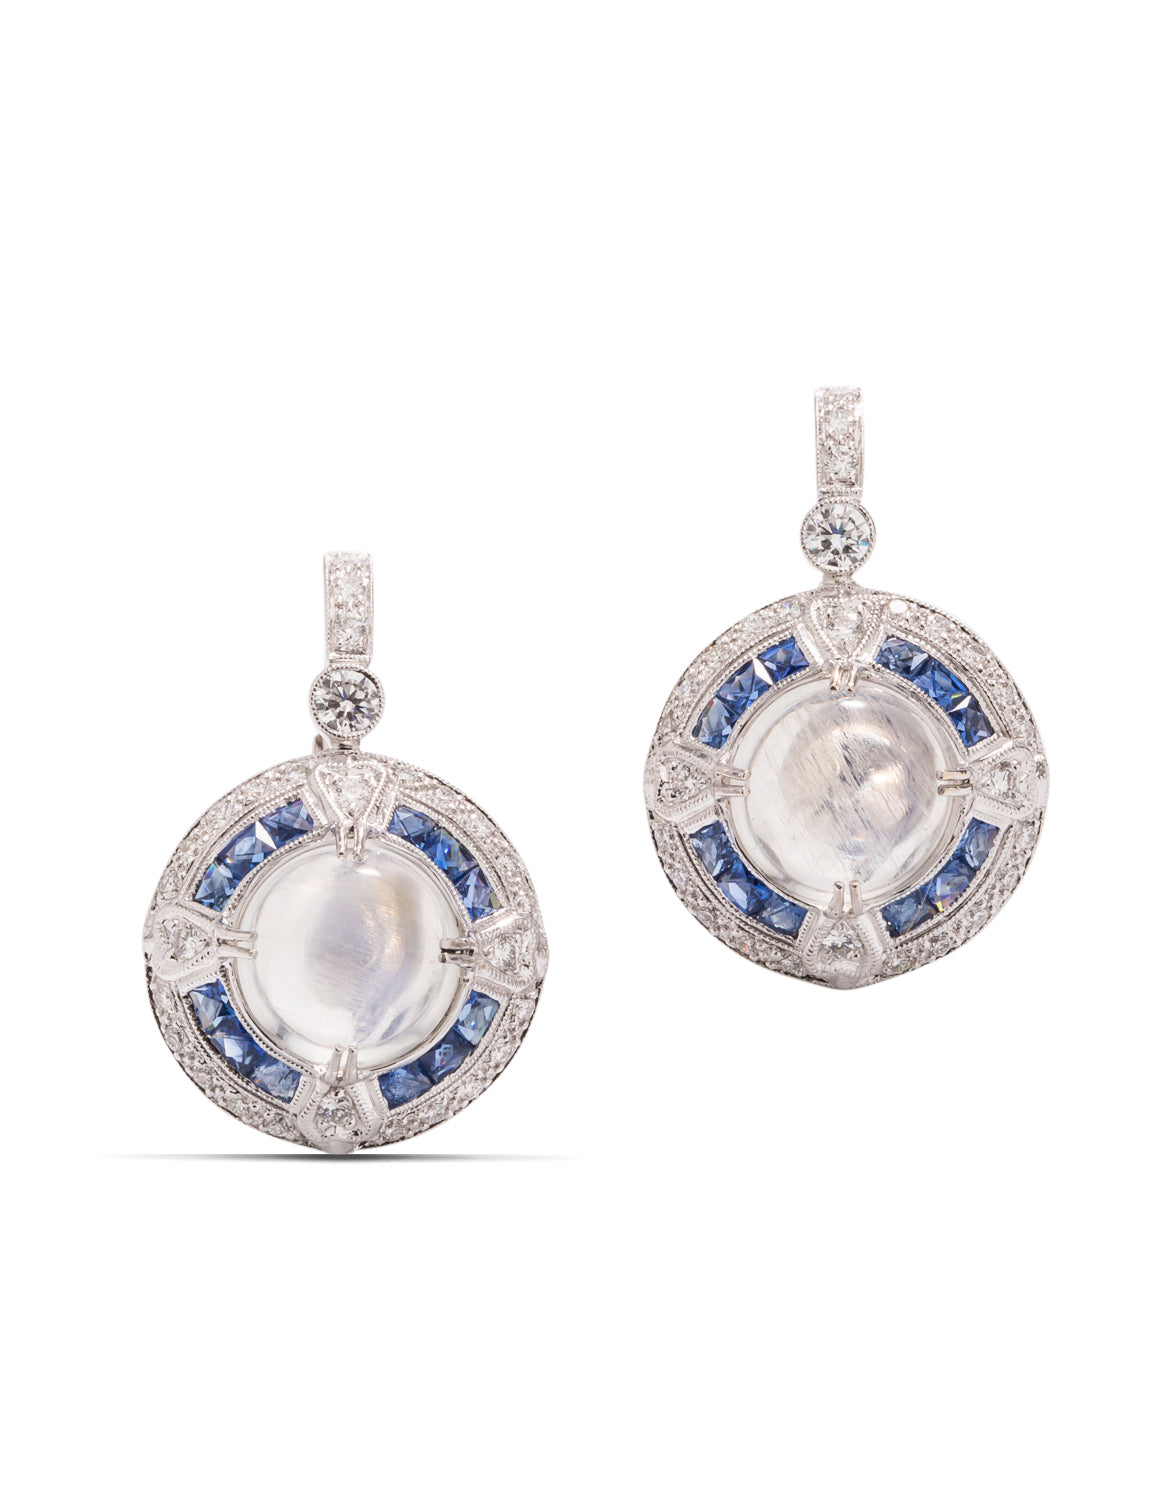 Moonstone, Sapphire and Diamond Earrings - Charles Koll Jewellers